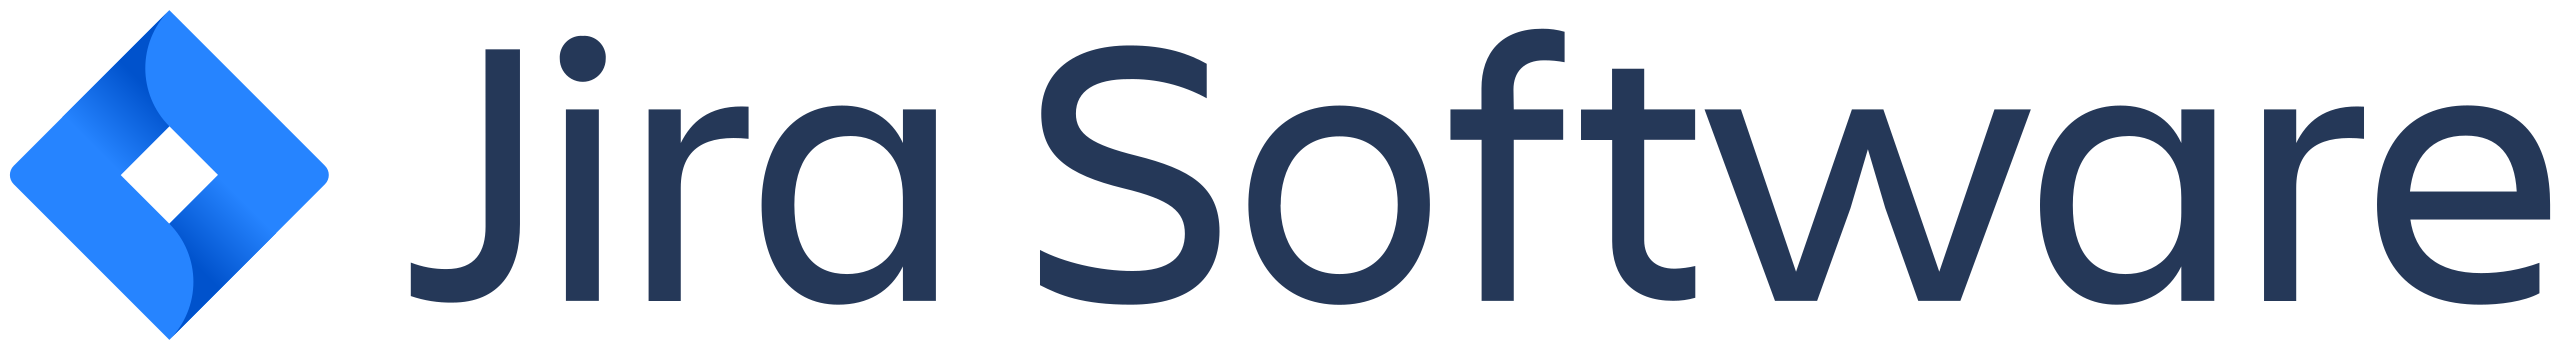 Jira_(Software)_logo.svg